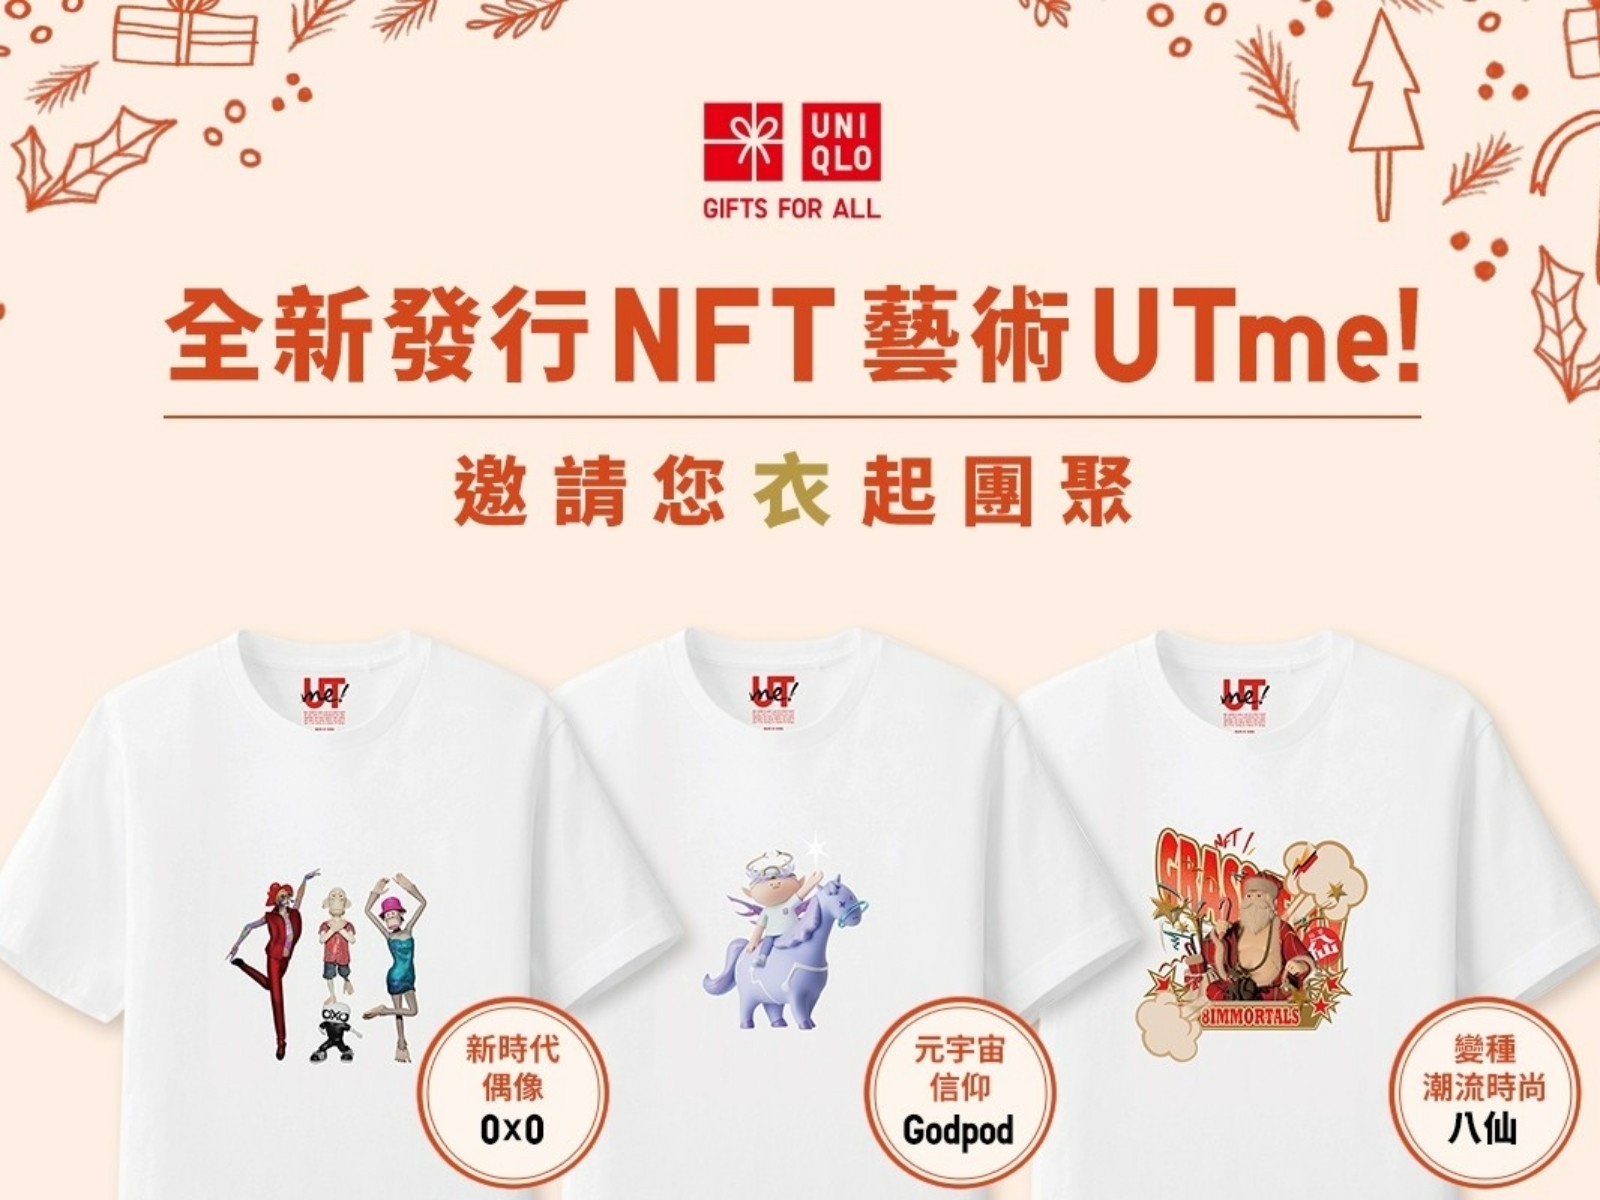 UNIQLO首度進軍元宇宙 全新推出三大台灣NFT藝術創作者UTme!